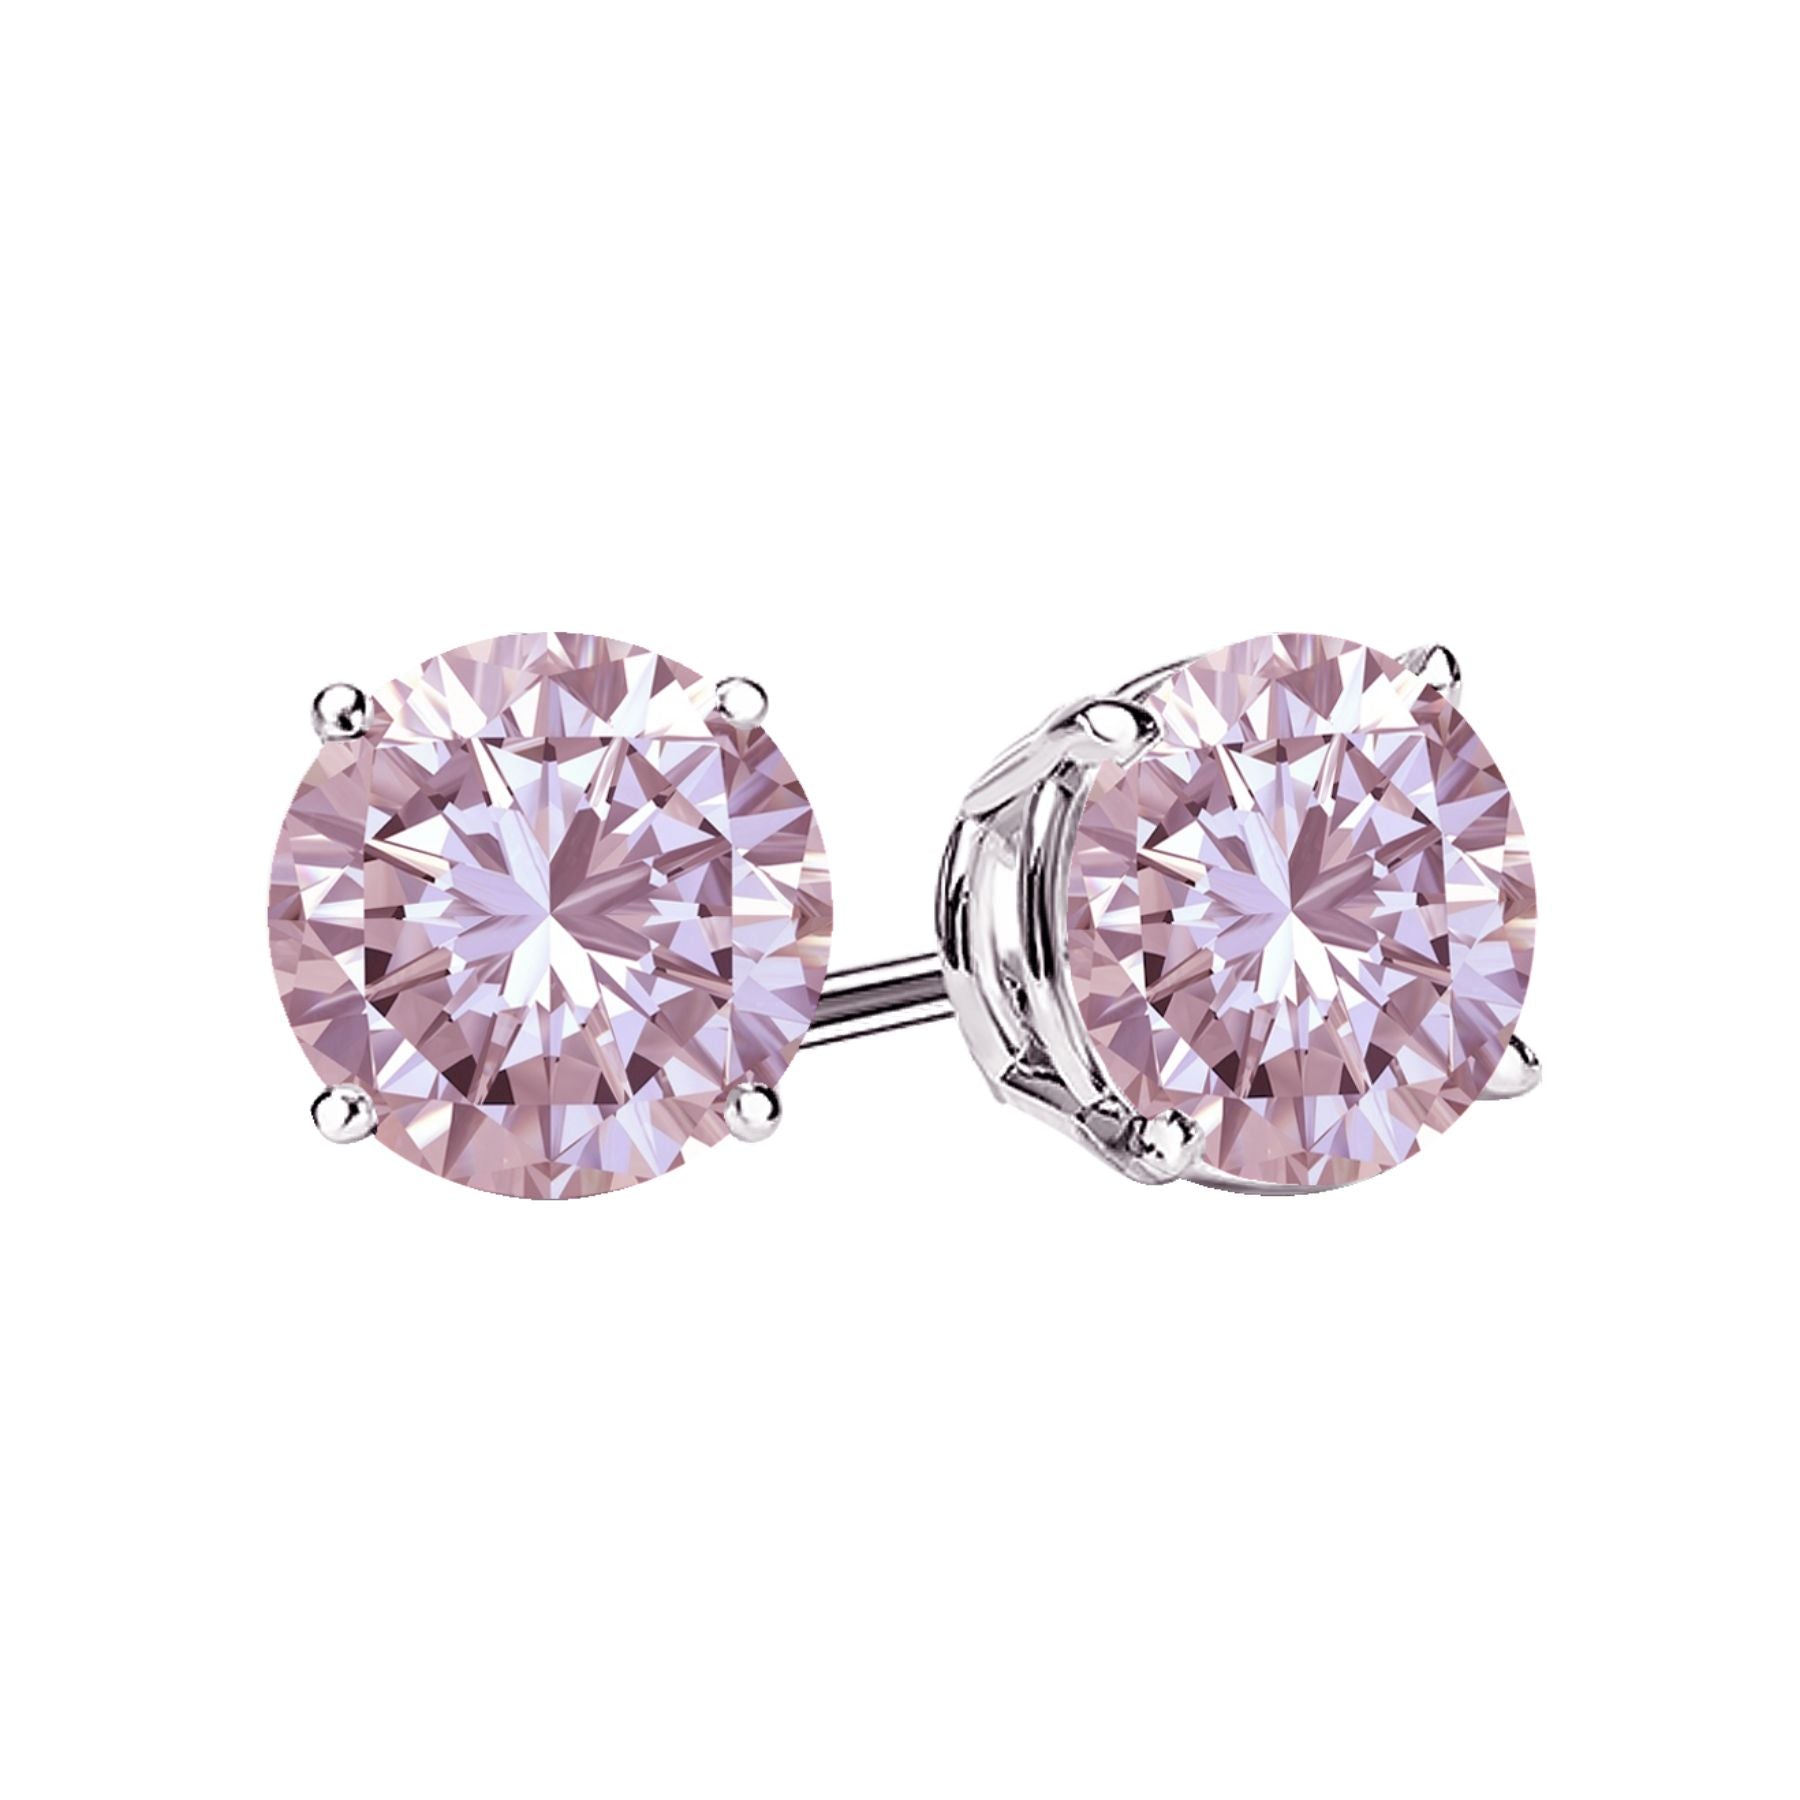 [Promo Set] Diana Pink Diamond Necklace Earrings Set 16 inch